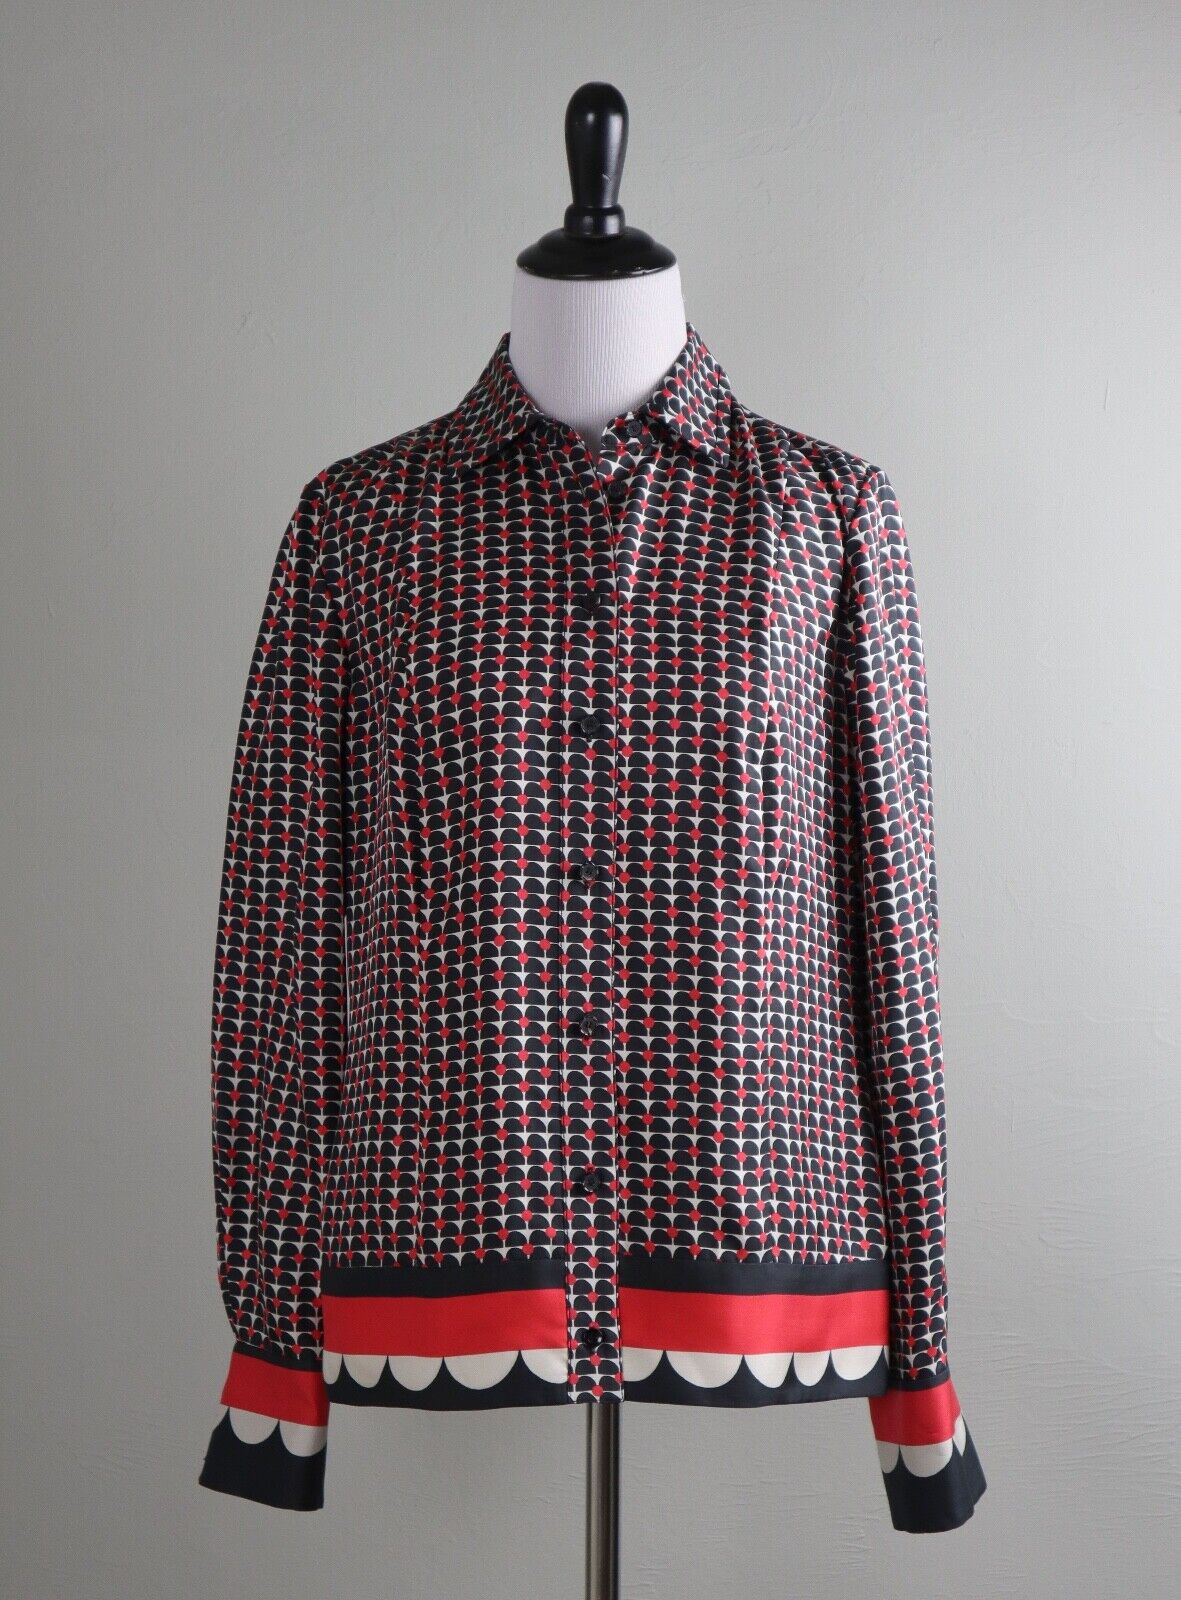 CARLISLE COLLECTION $328 Geo Print Button Up 100% Silk Dressy Shirt Top Size 4